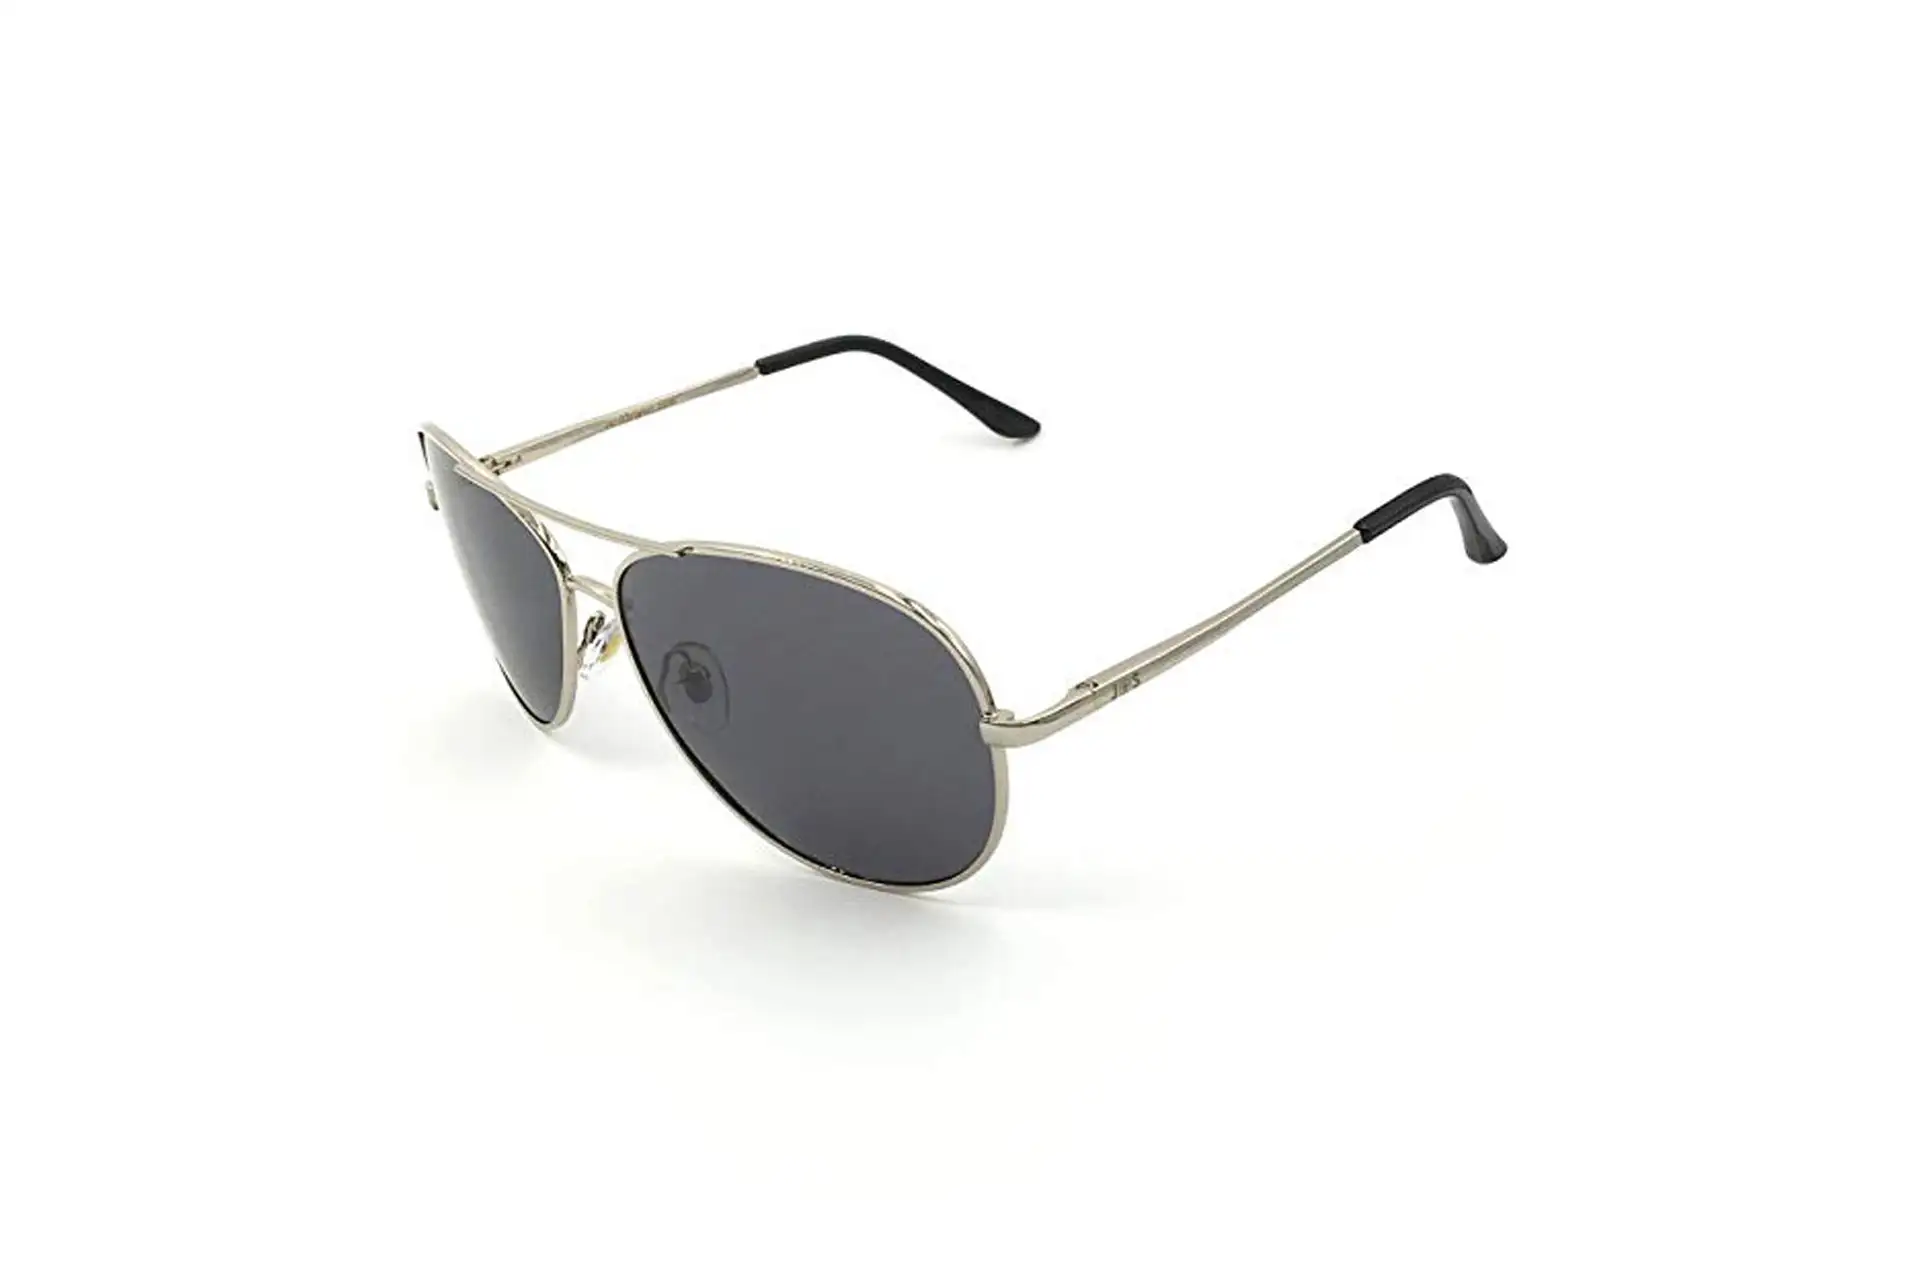 Aviator Sunglasses; Courtesy of Amazon